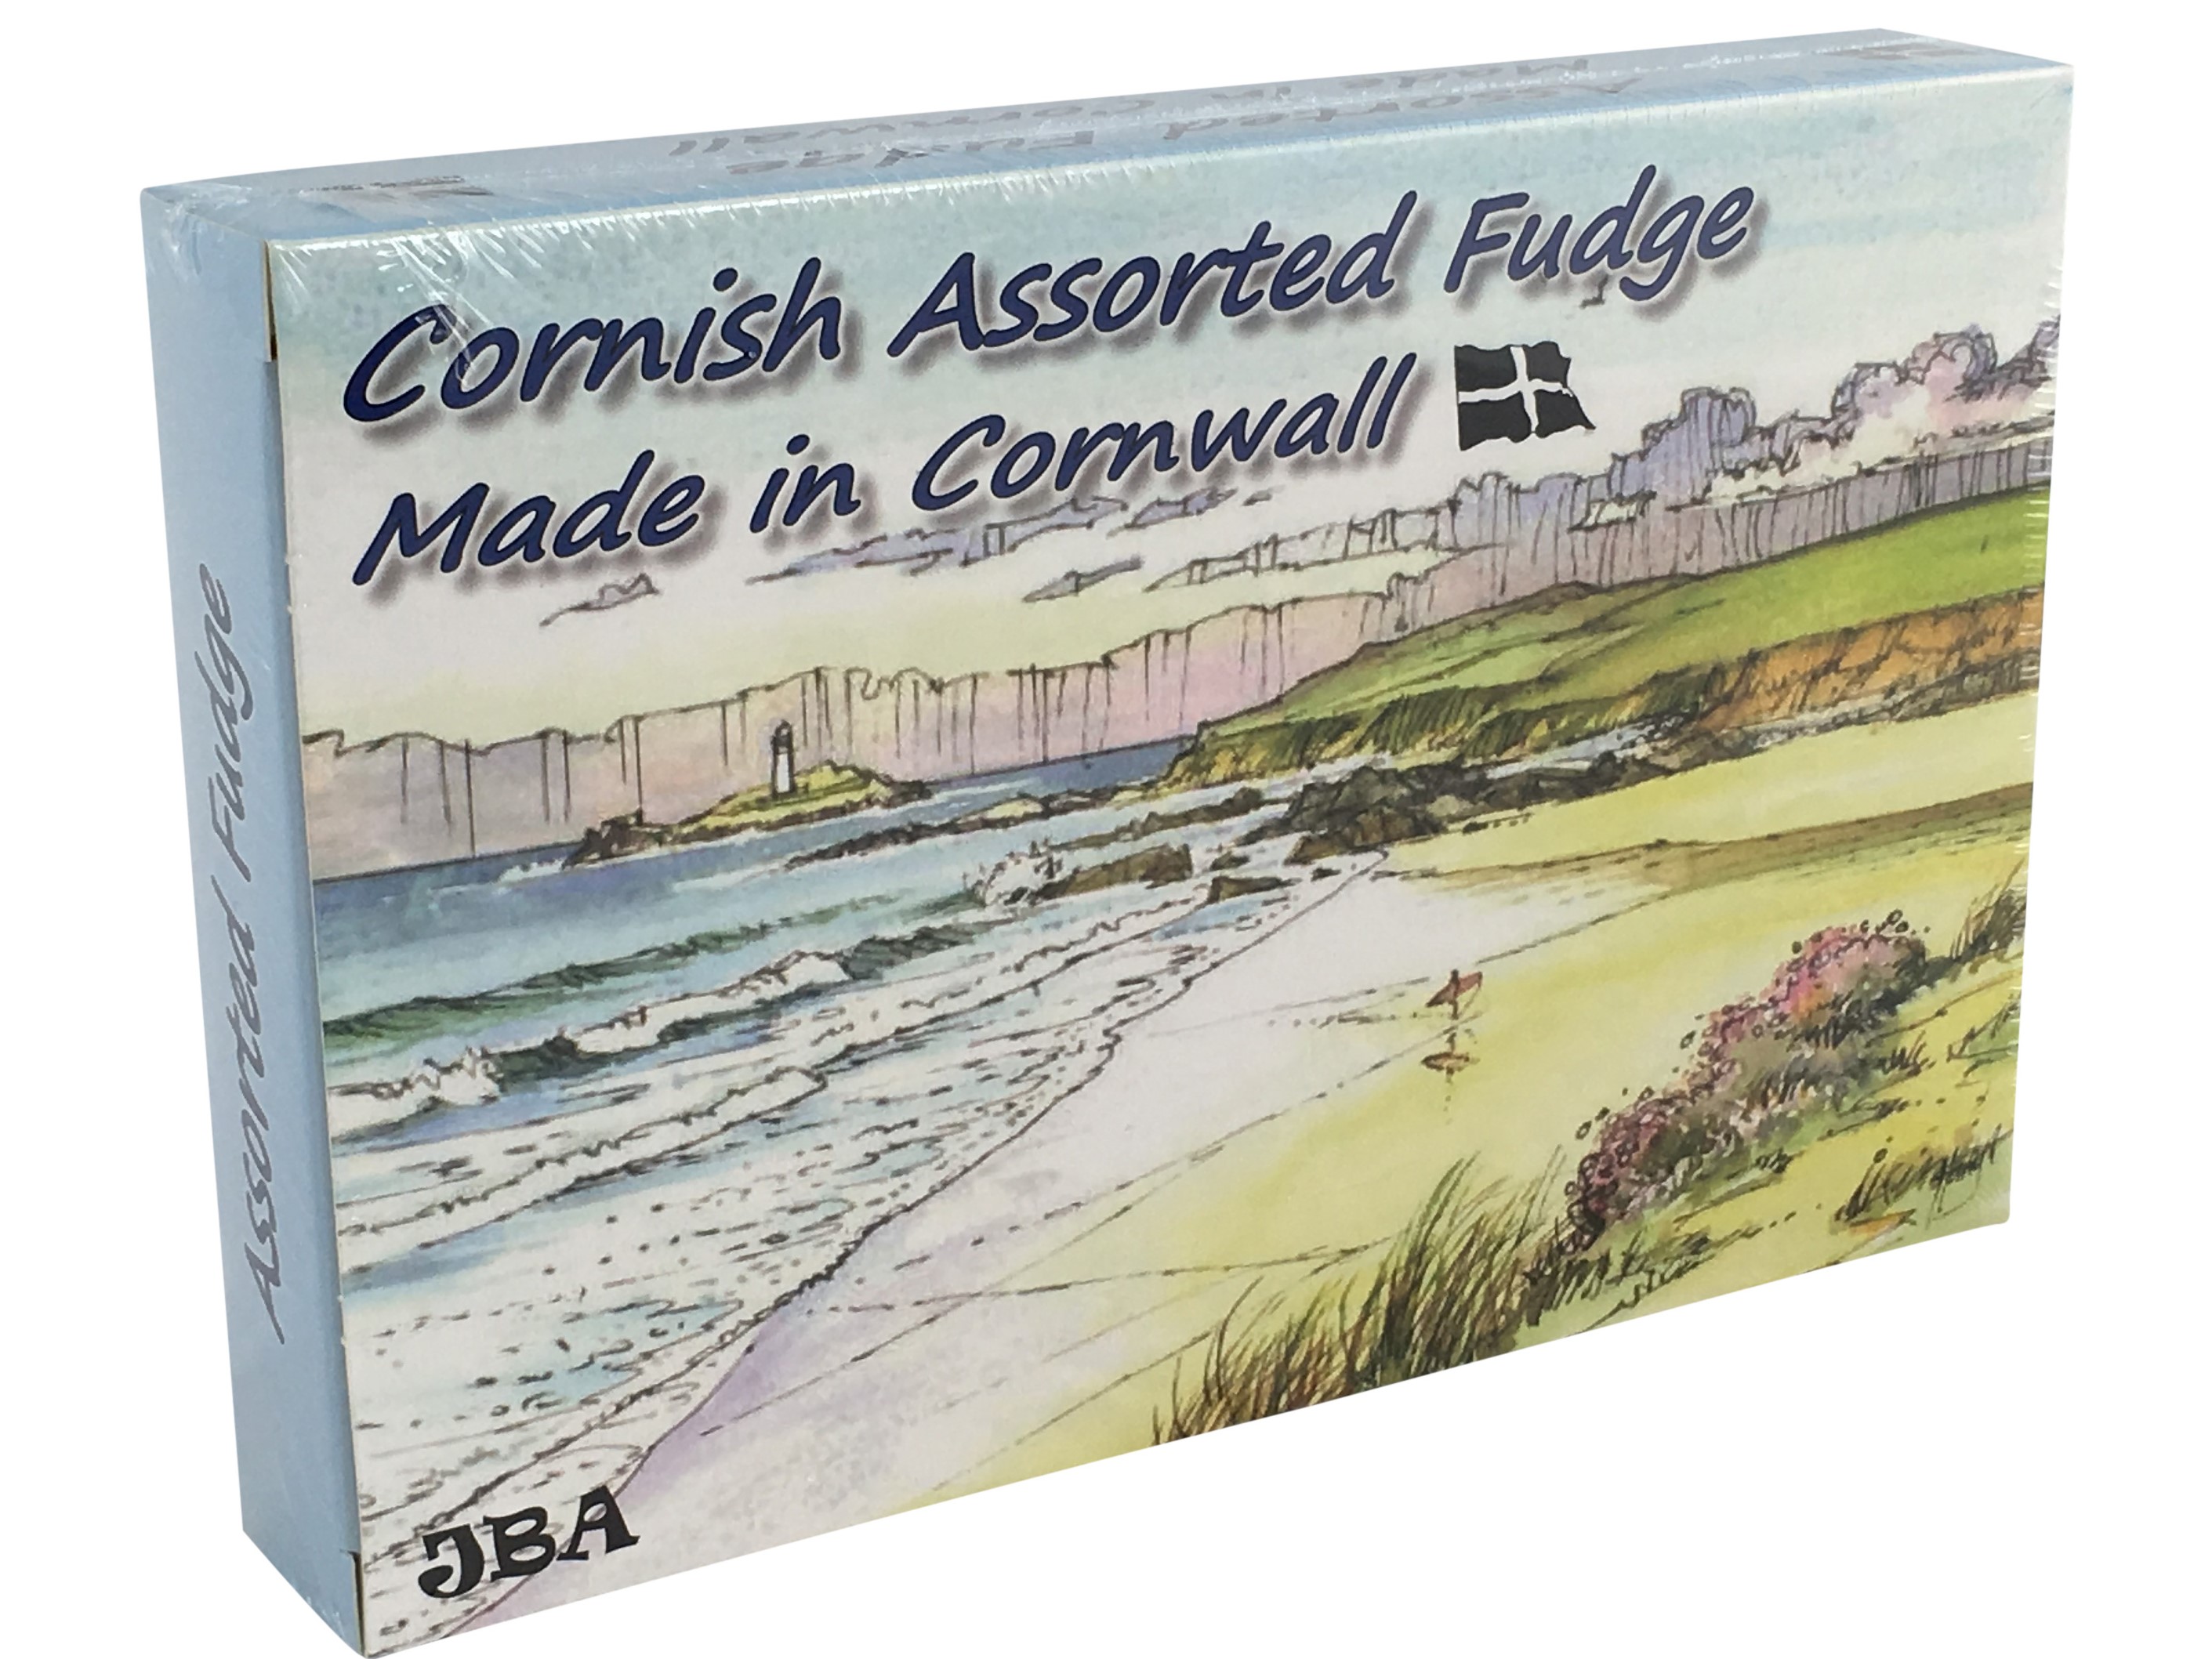 150g Made in Cornwall Assorted Fudge Cornwall Scenes Box